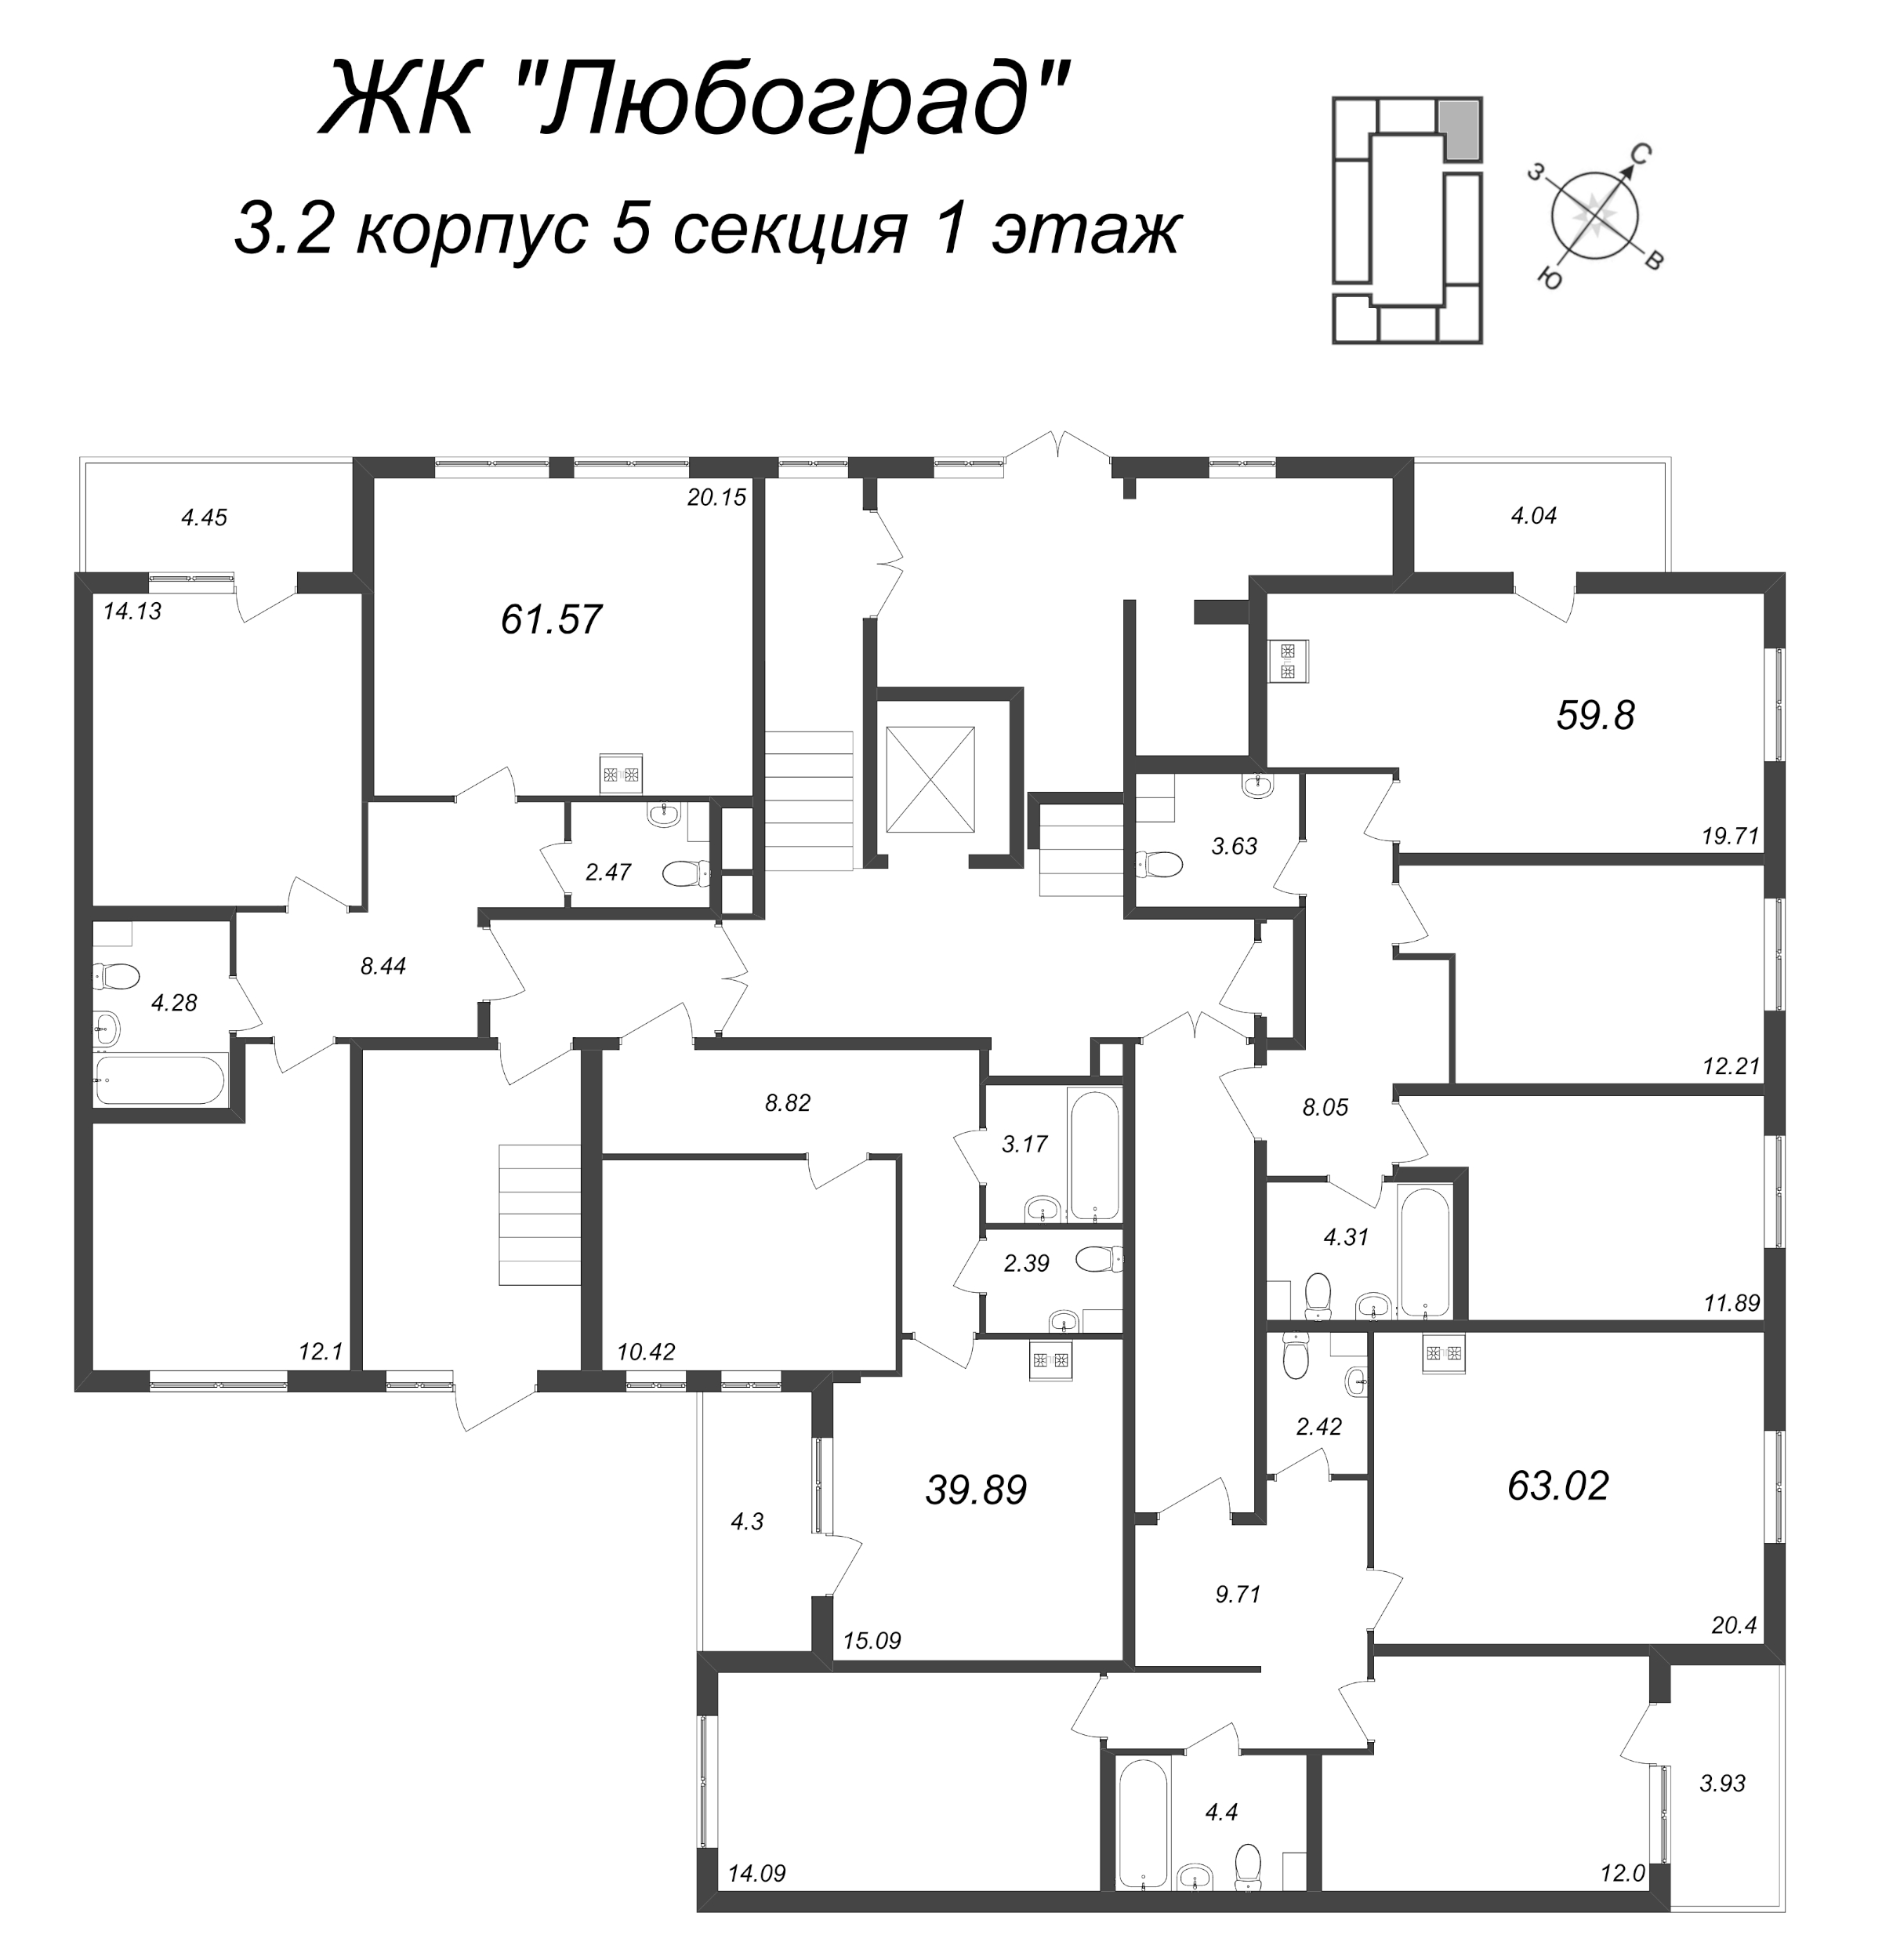 2-комнатная (Евро) квартира, 39.89 м² - планировка этажа